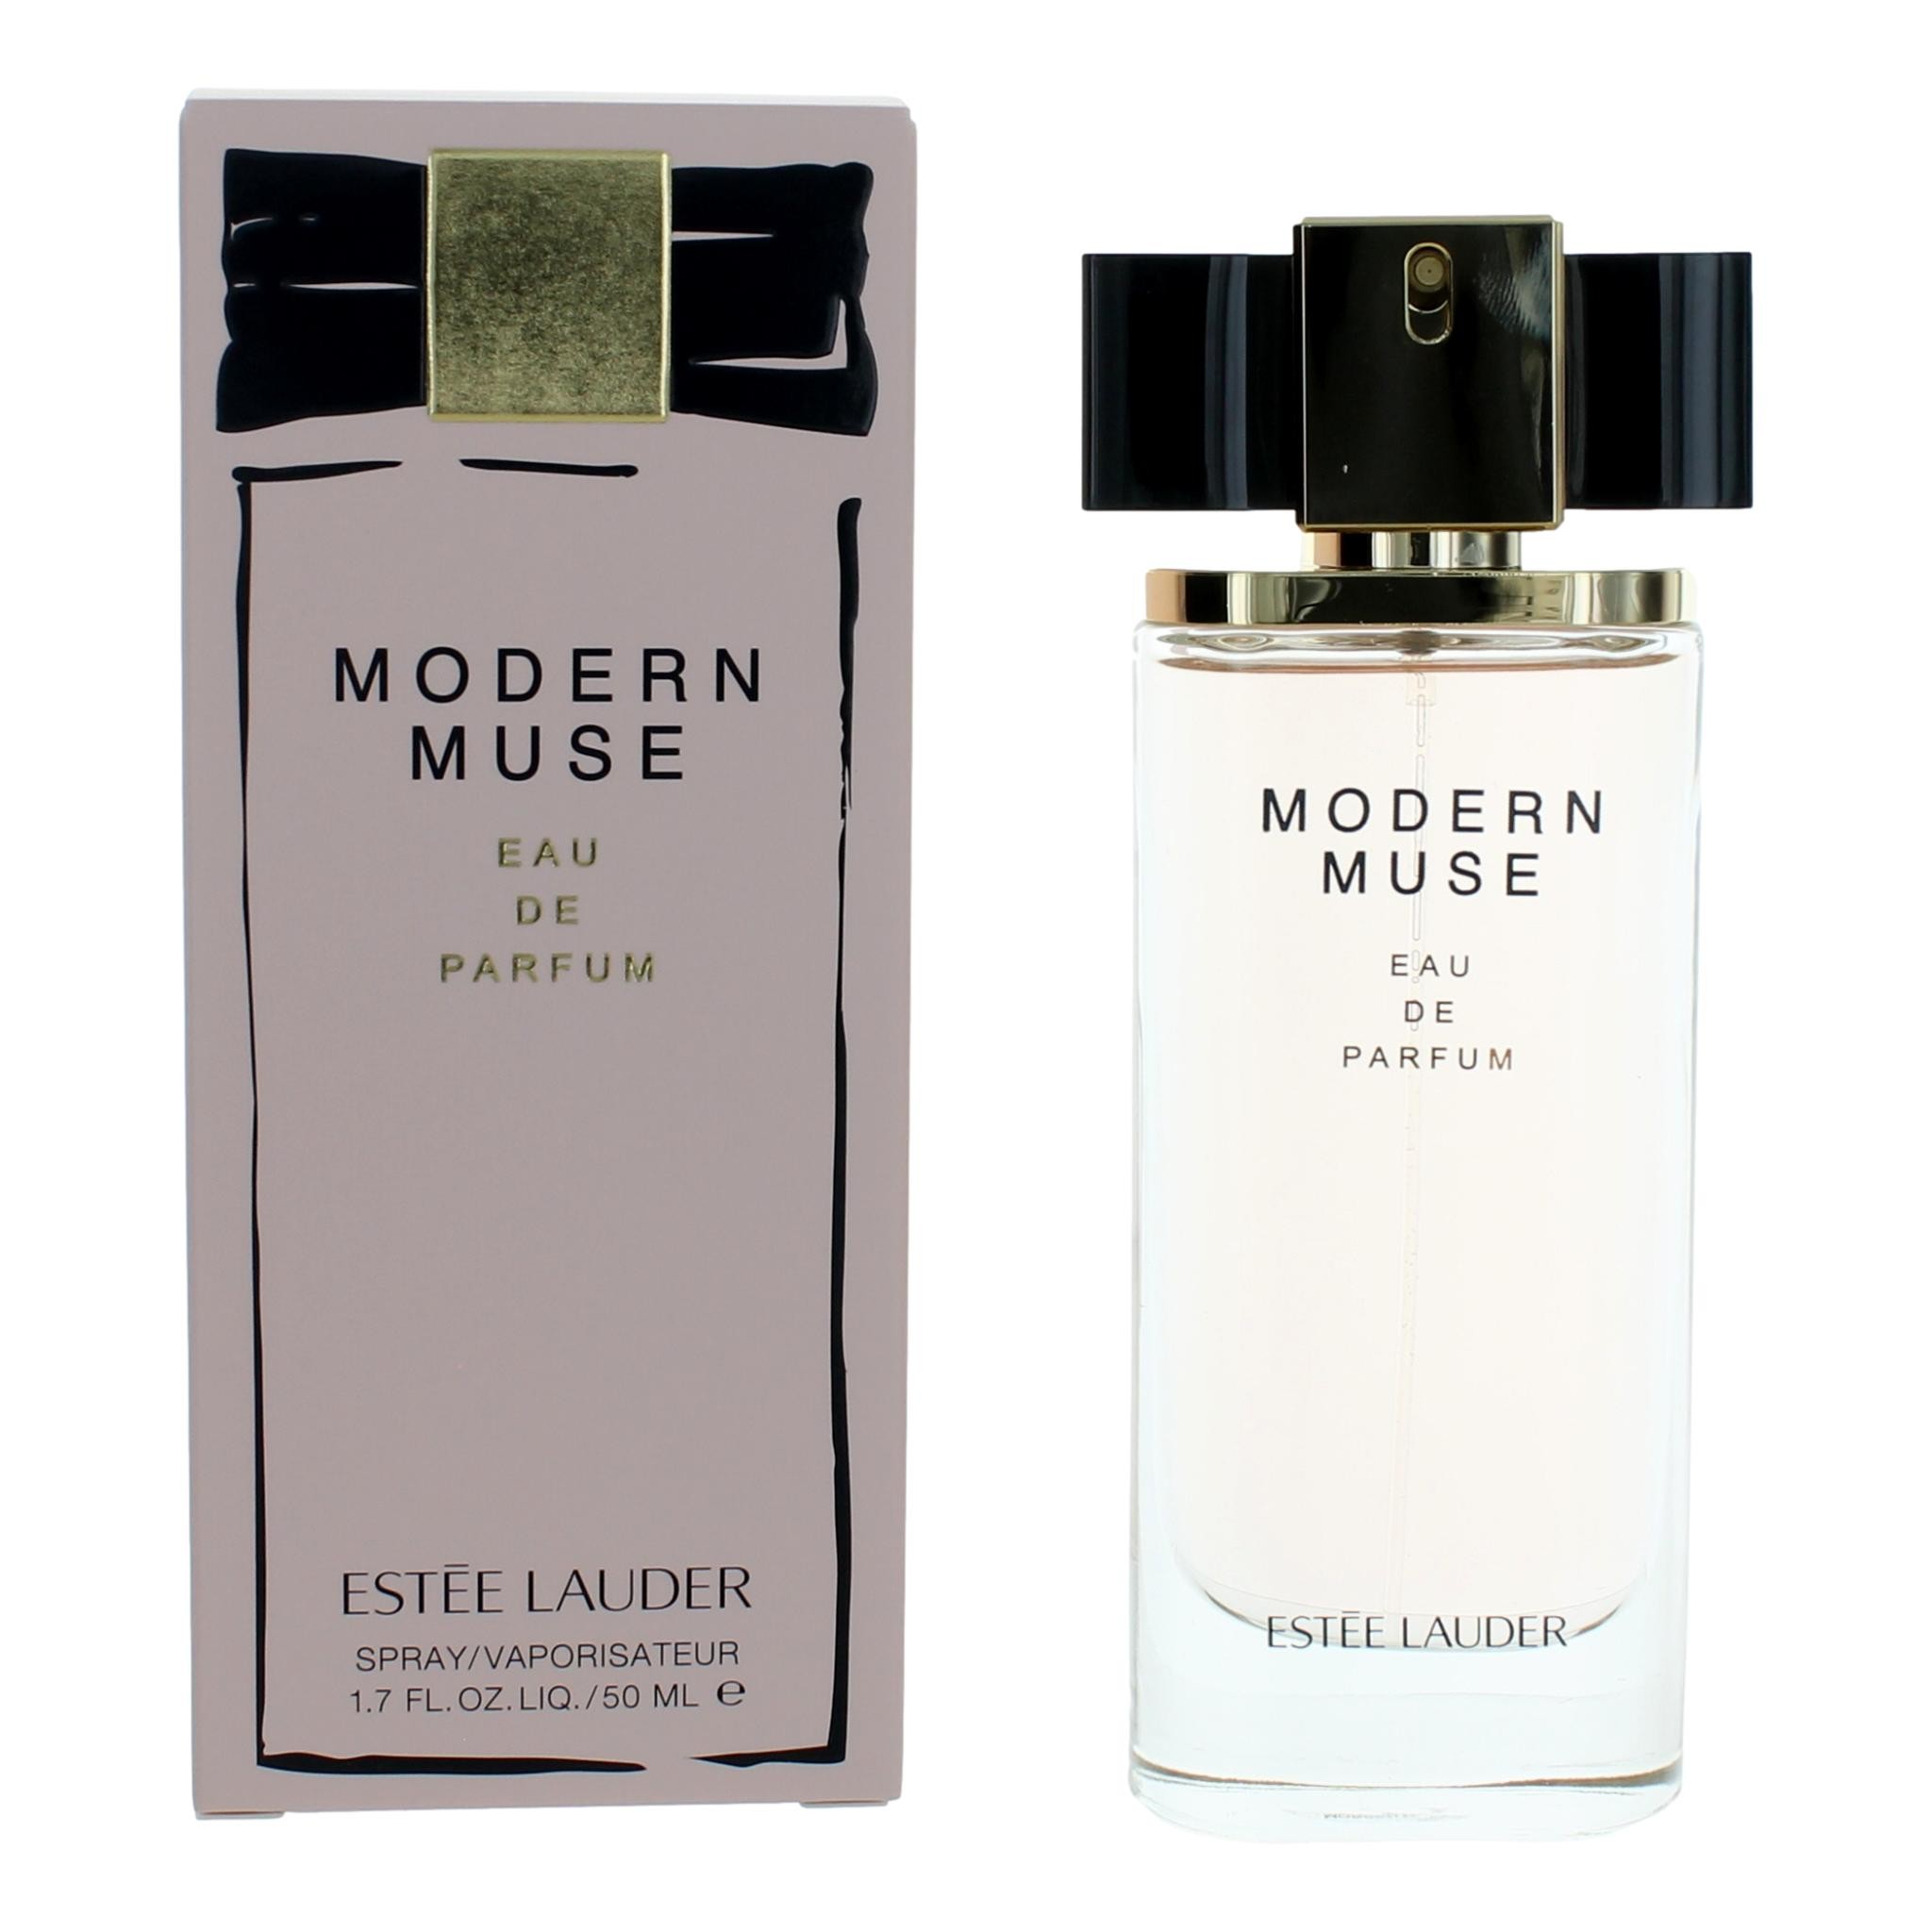 Modern Muse by Estee Lauder 1.7 oz Eau De Parfum Spray for Women